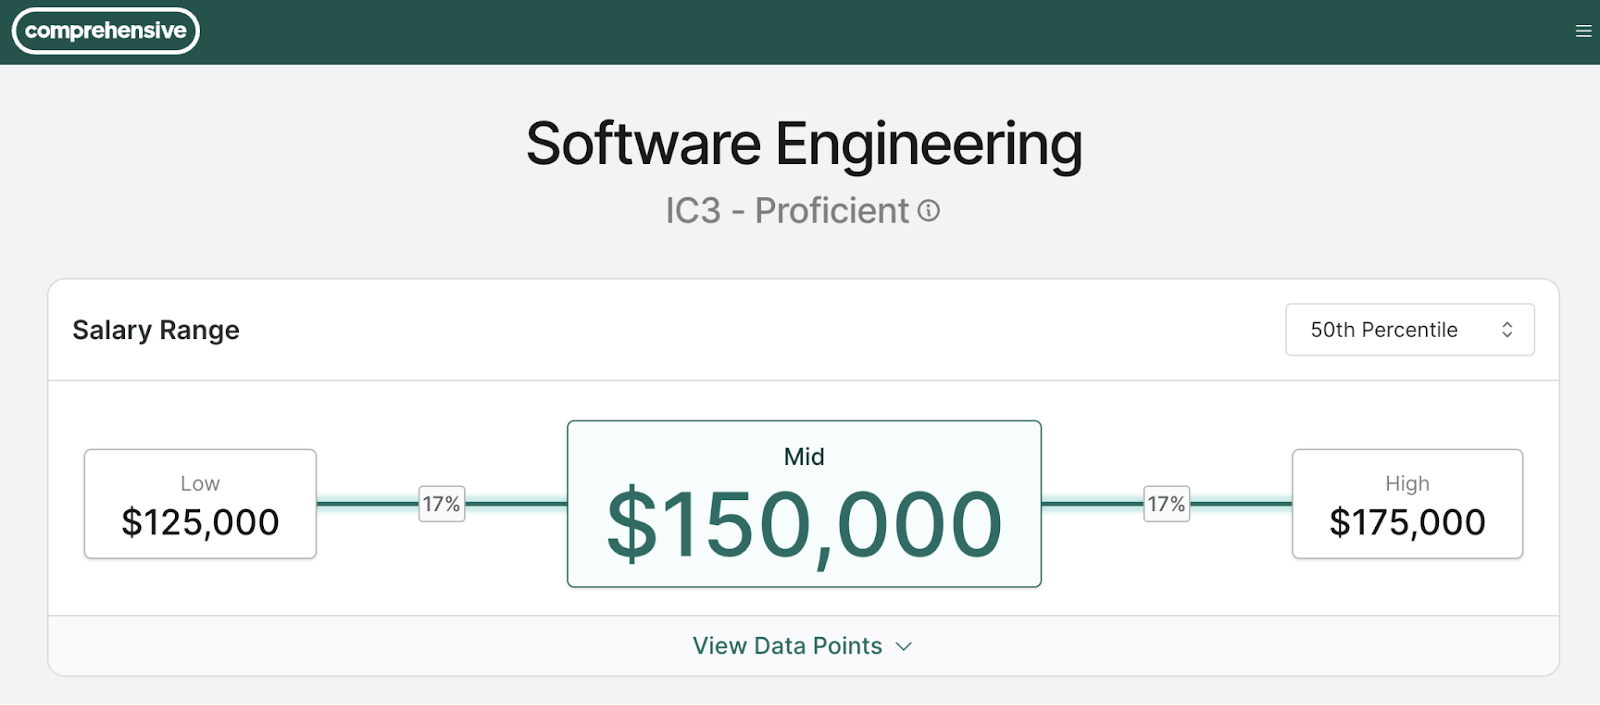 Software engineering salary range.